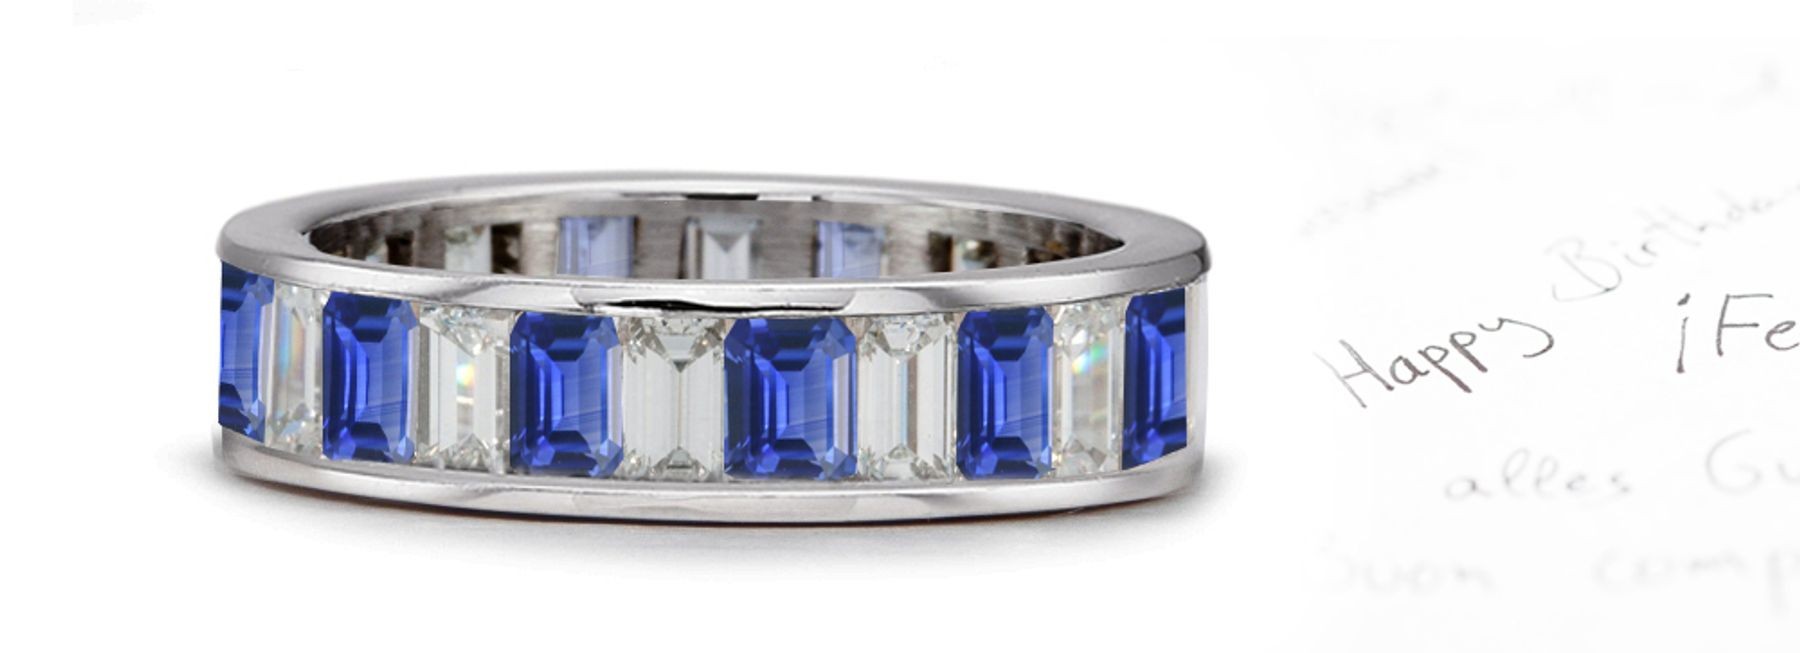 Channel Set Emerald Cut Diamond & Sapphire Band in Platinum Ring